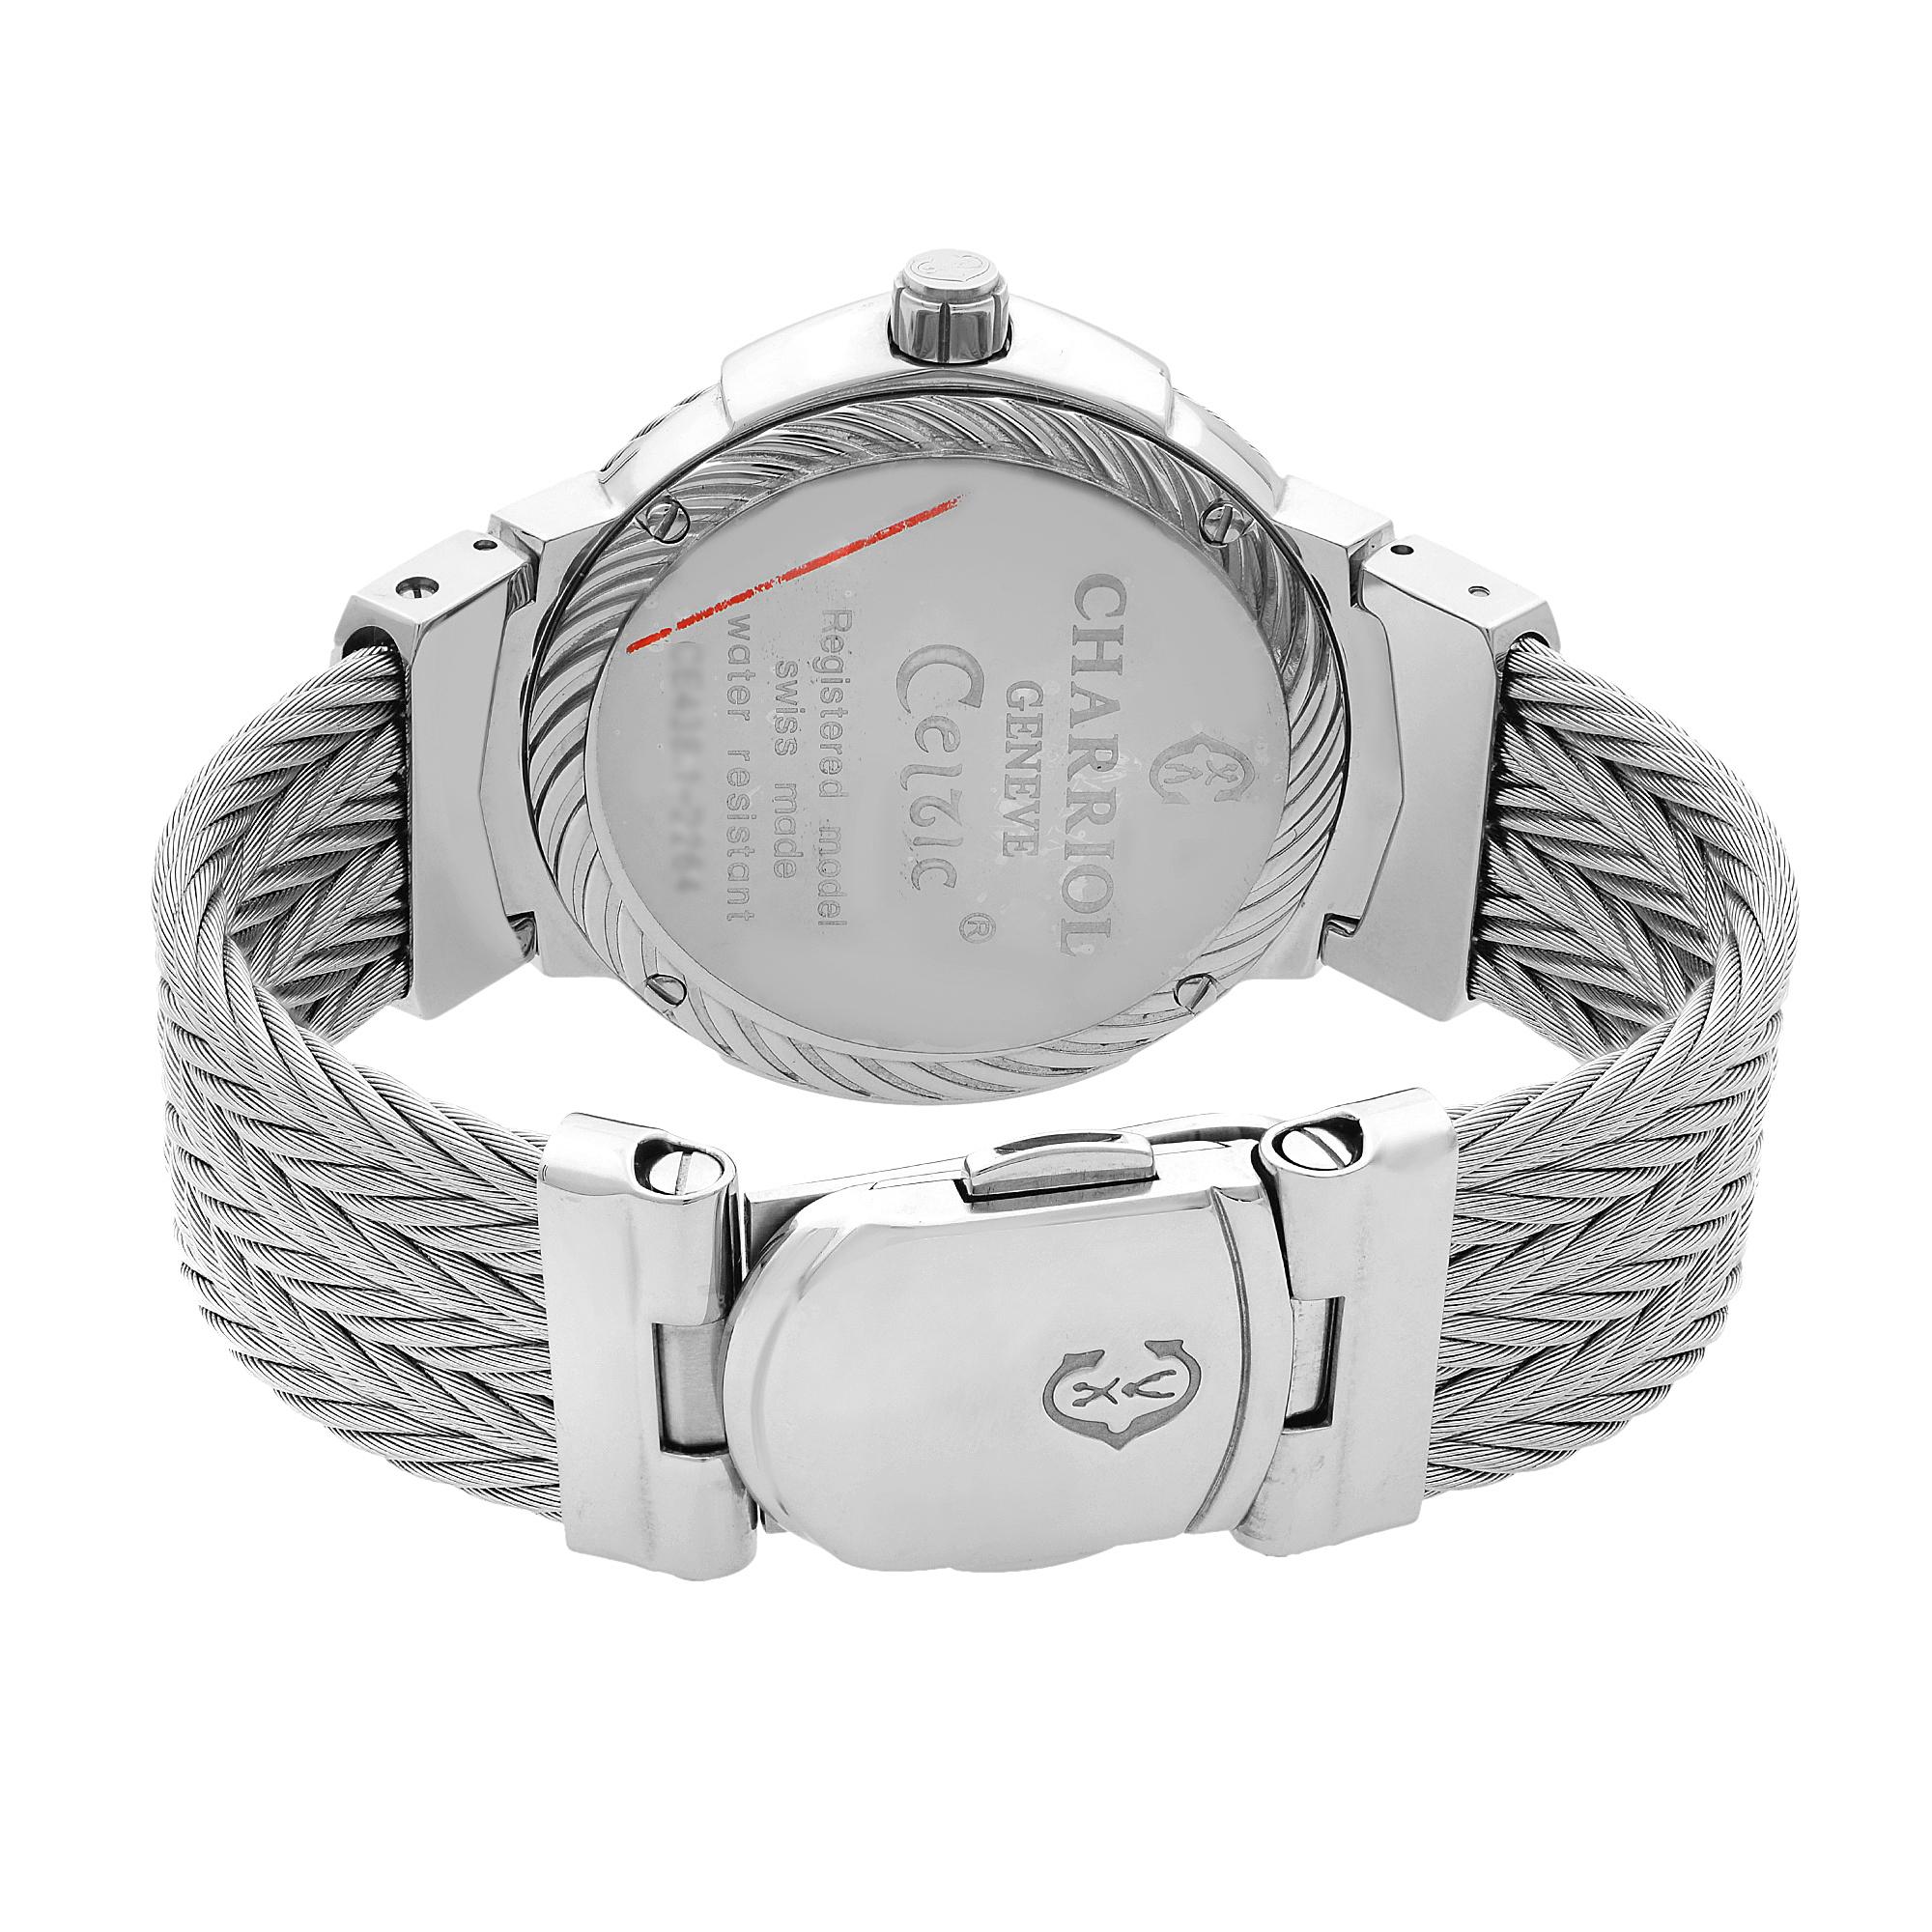 Modern Charriol Celtic Stainless Steel MOP Dial Ladies Quartz Watch CE438S.650.001